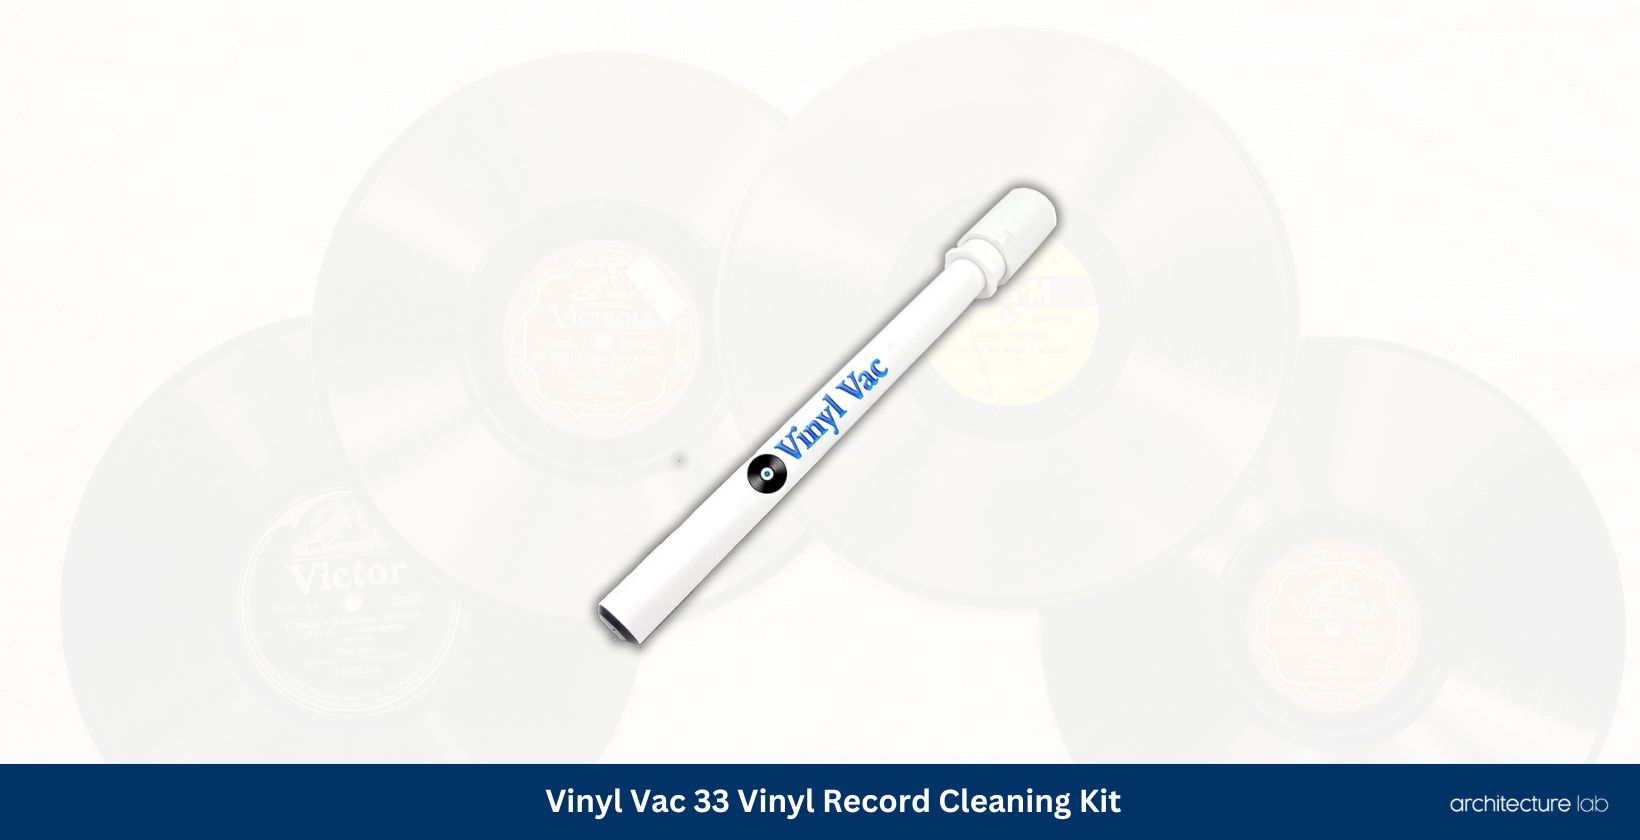 Vinyl vac 33 vinyl record cleaning kit